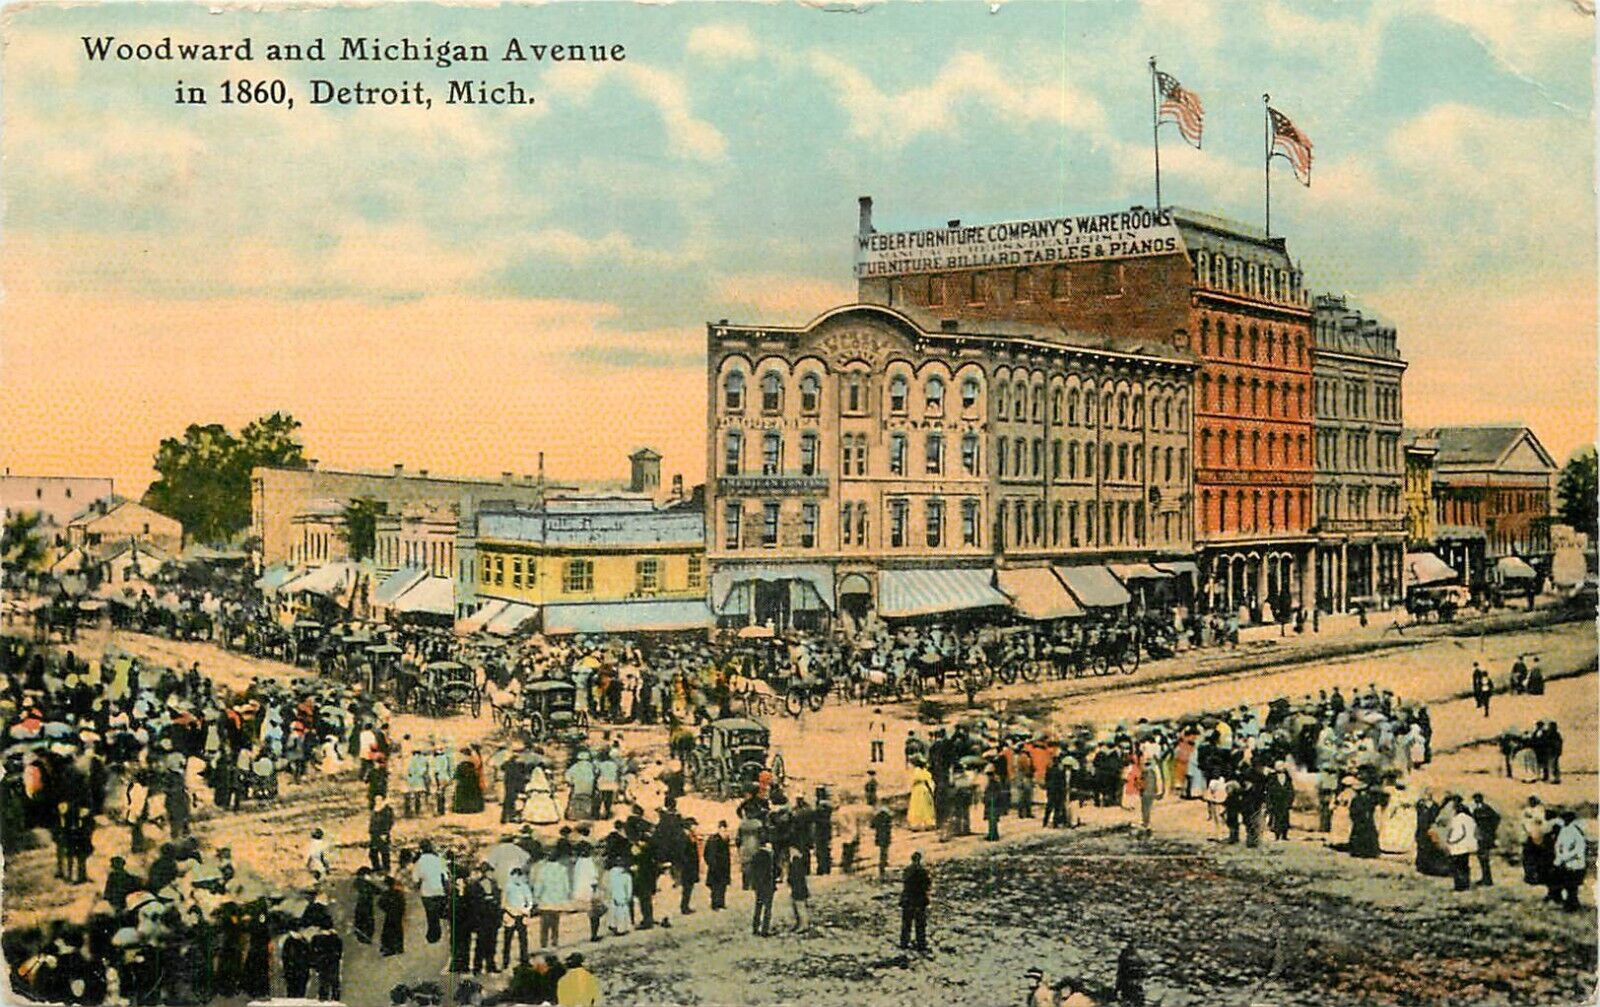 1911 Woodward and Michigan Avenue in 1860, Detroit, Michigan Postcard